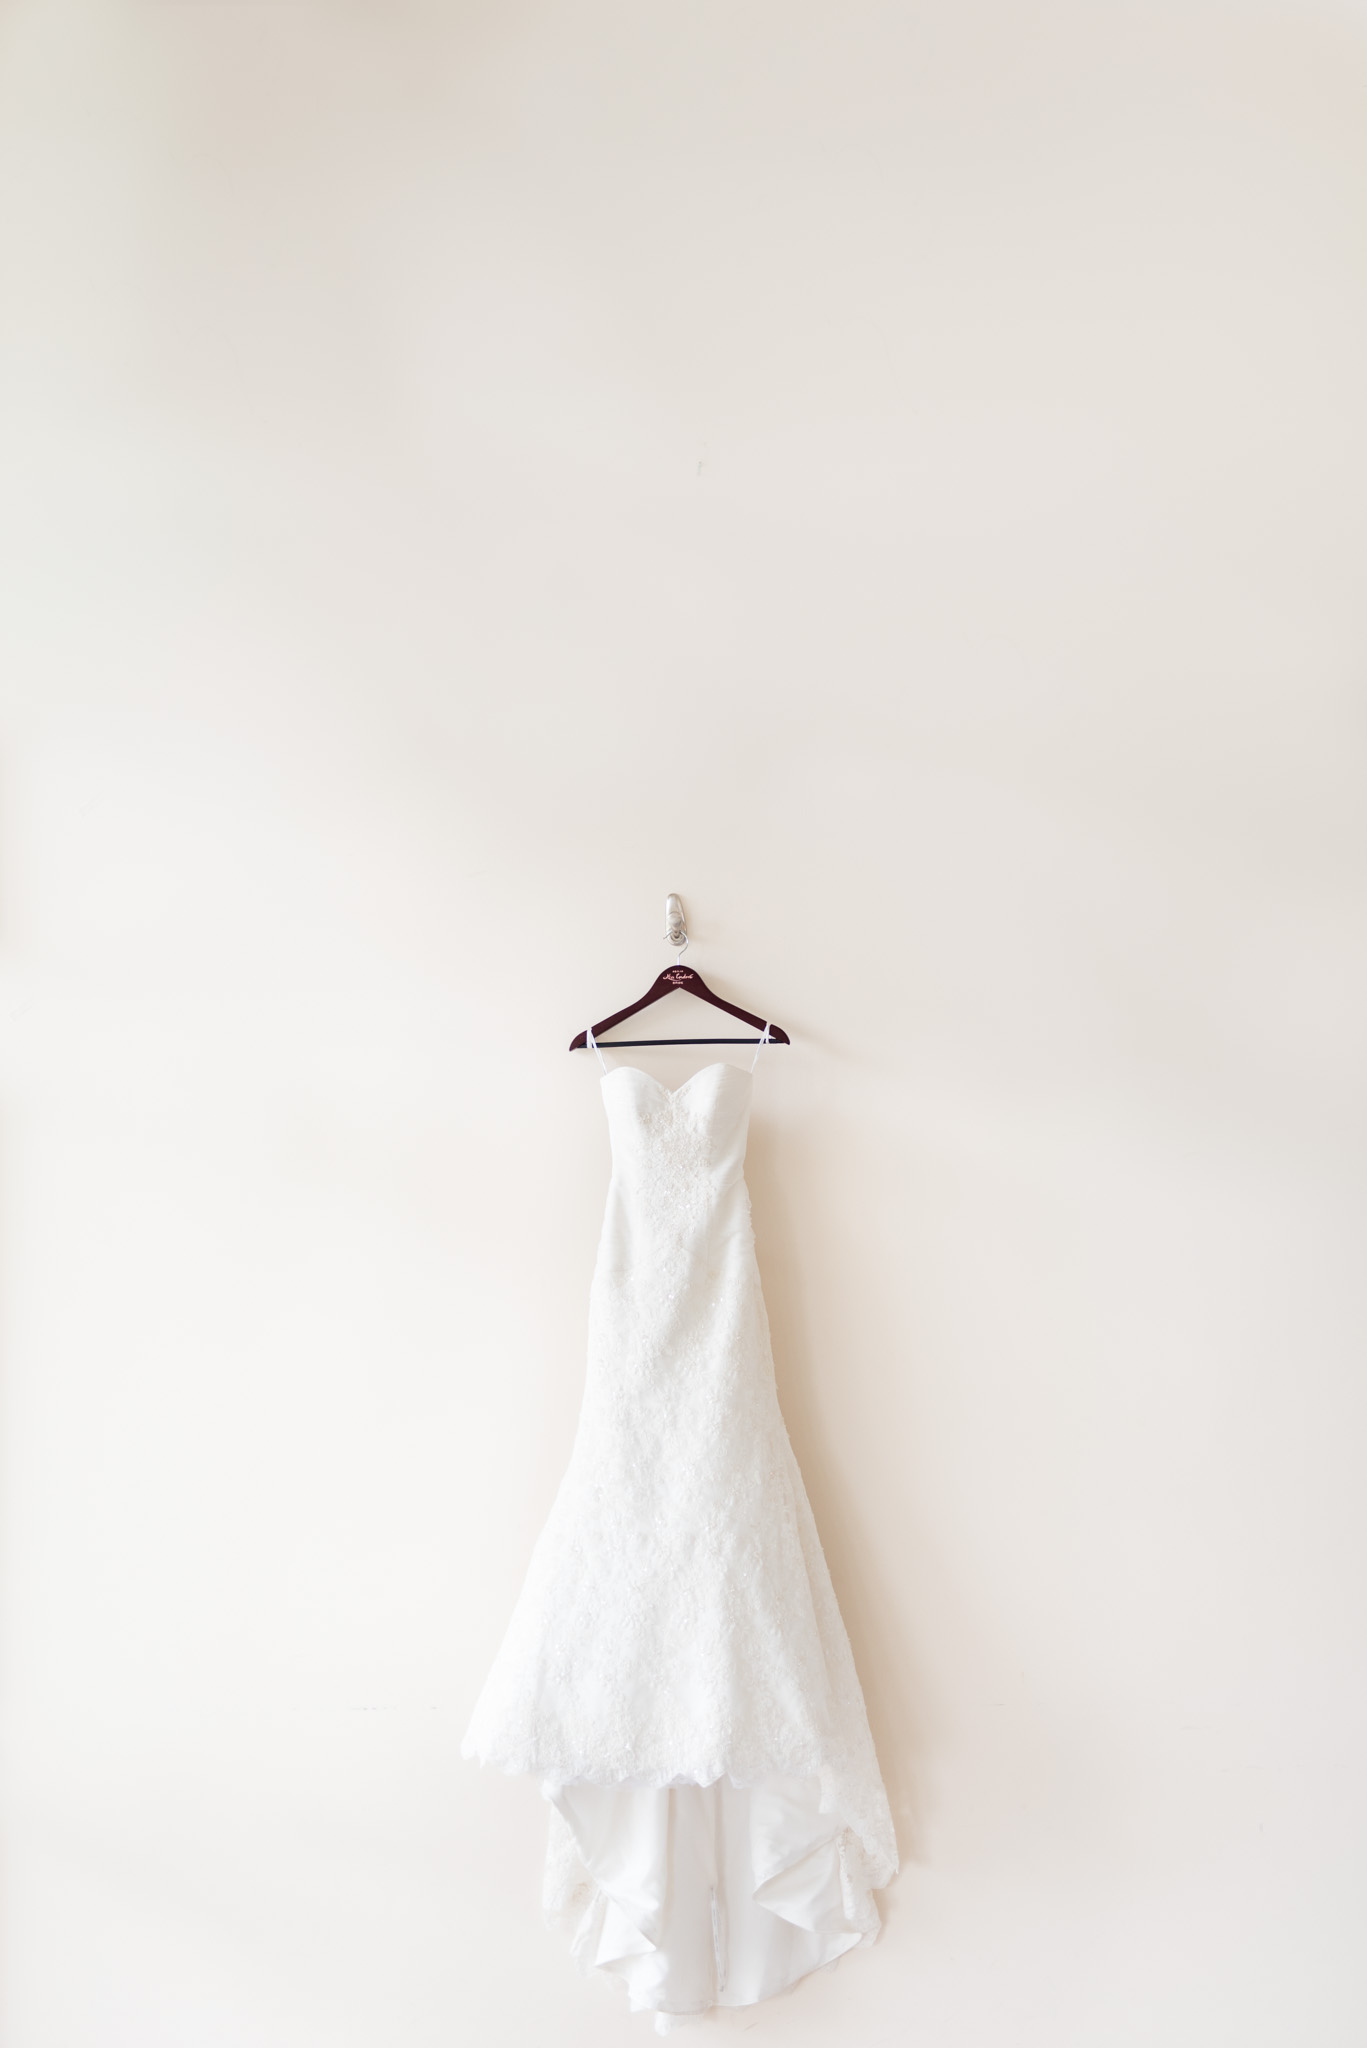 Wedding dress hangs on large cream wall.